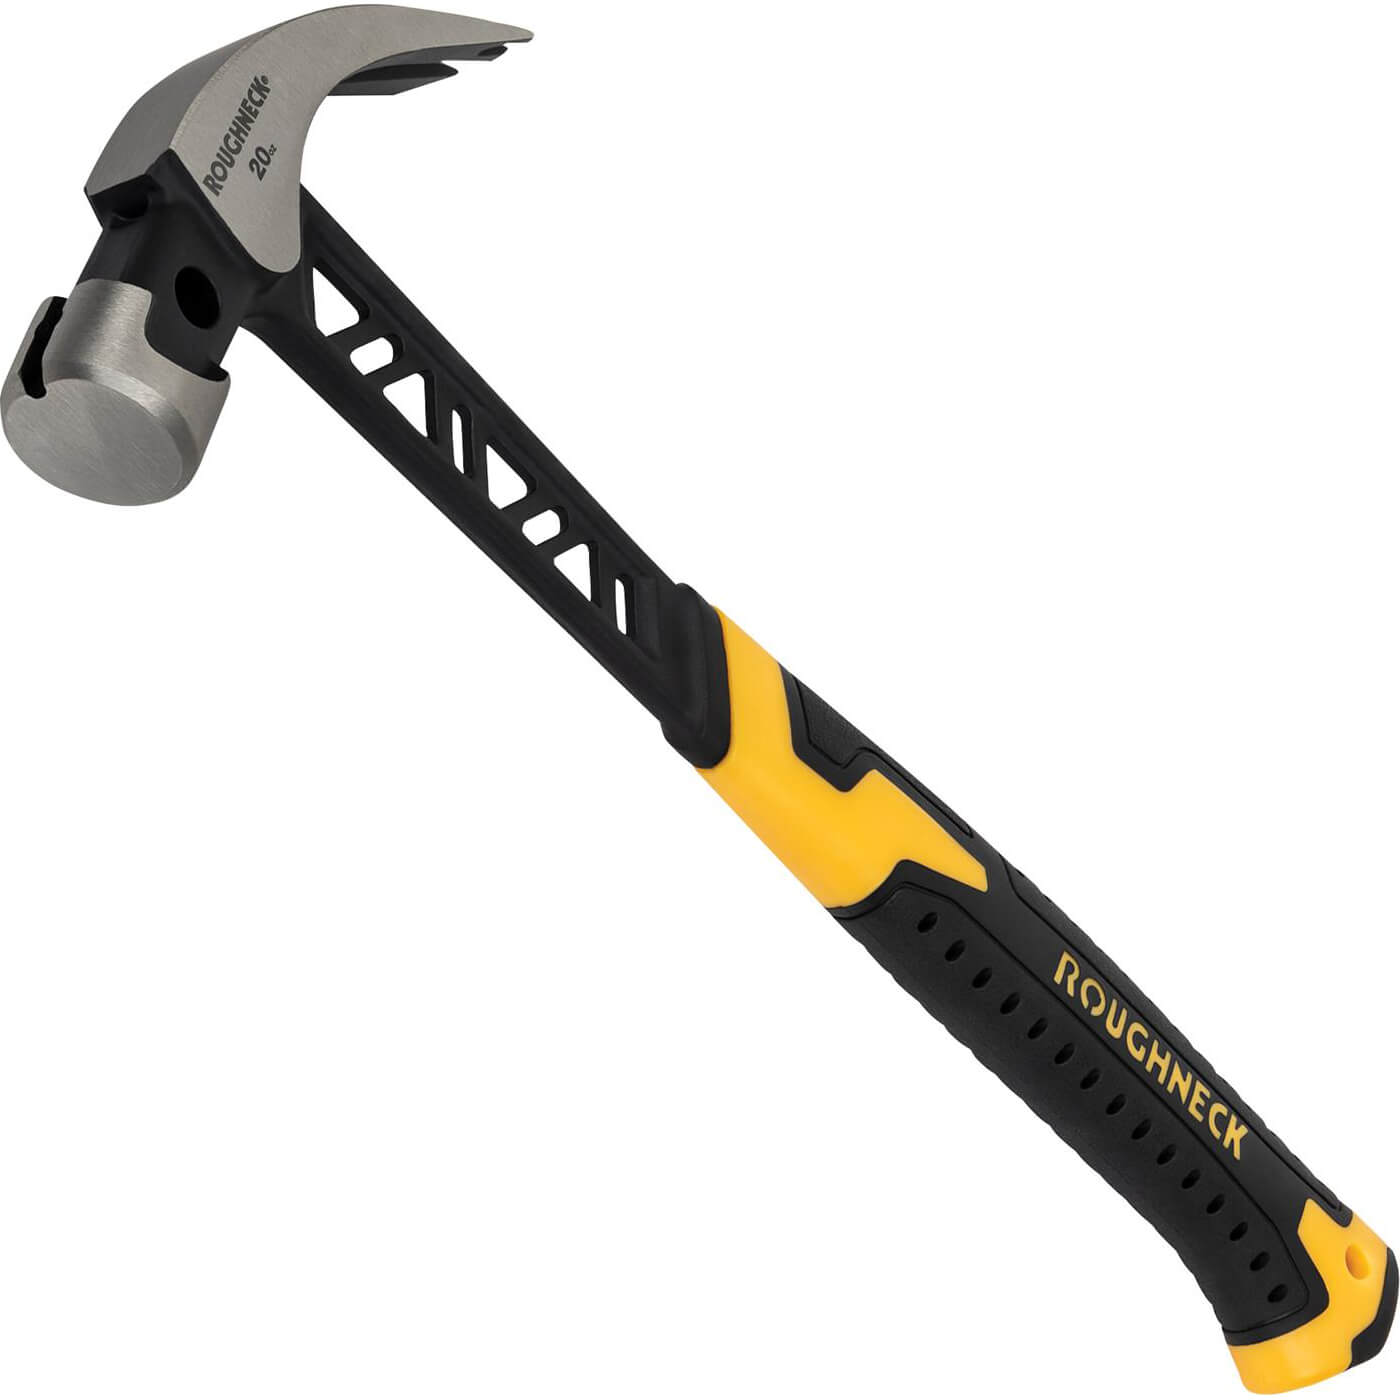 Image of Roughneck Gorilla V-Series Claw Hammer 560g